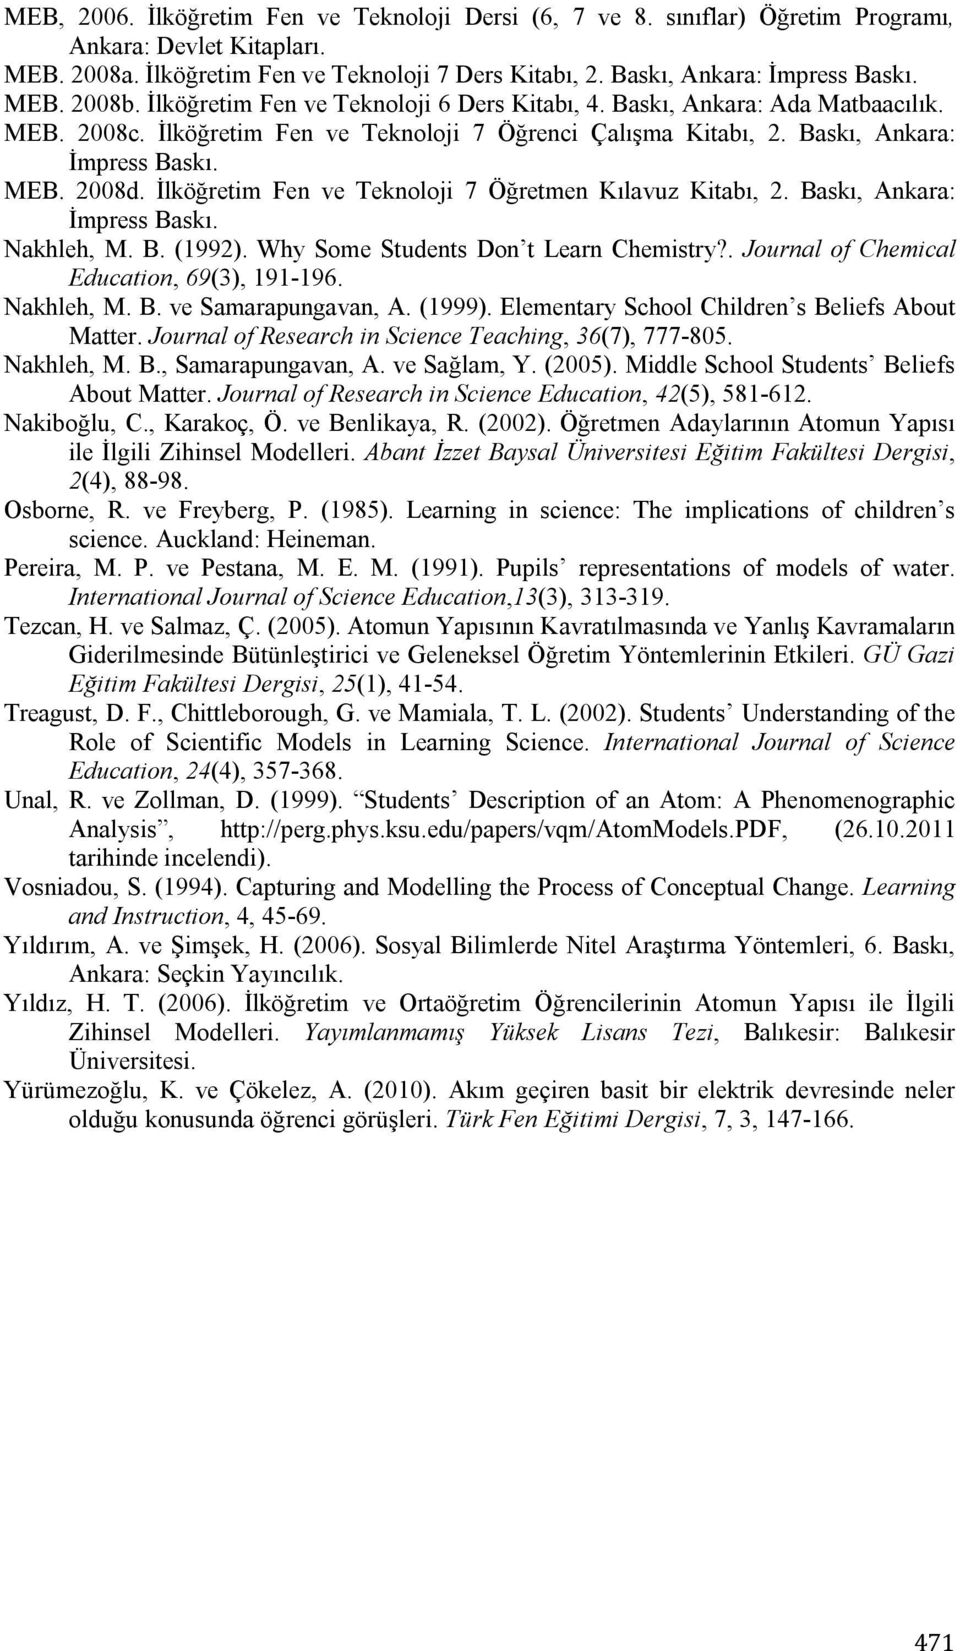 İlköğretim Fen ve Teknoloji 7 Öğretmen Kılavuz Kitabı, 2. Baskı, Ankara: İmpress Baskı. Nakhleh, M. B. (1992). Why Some Students Don t Learn Chemistry?. Journal of Chemical Education, 69(3), 191-196.